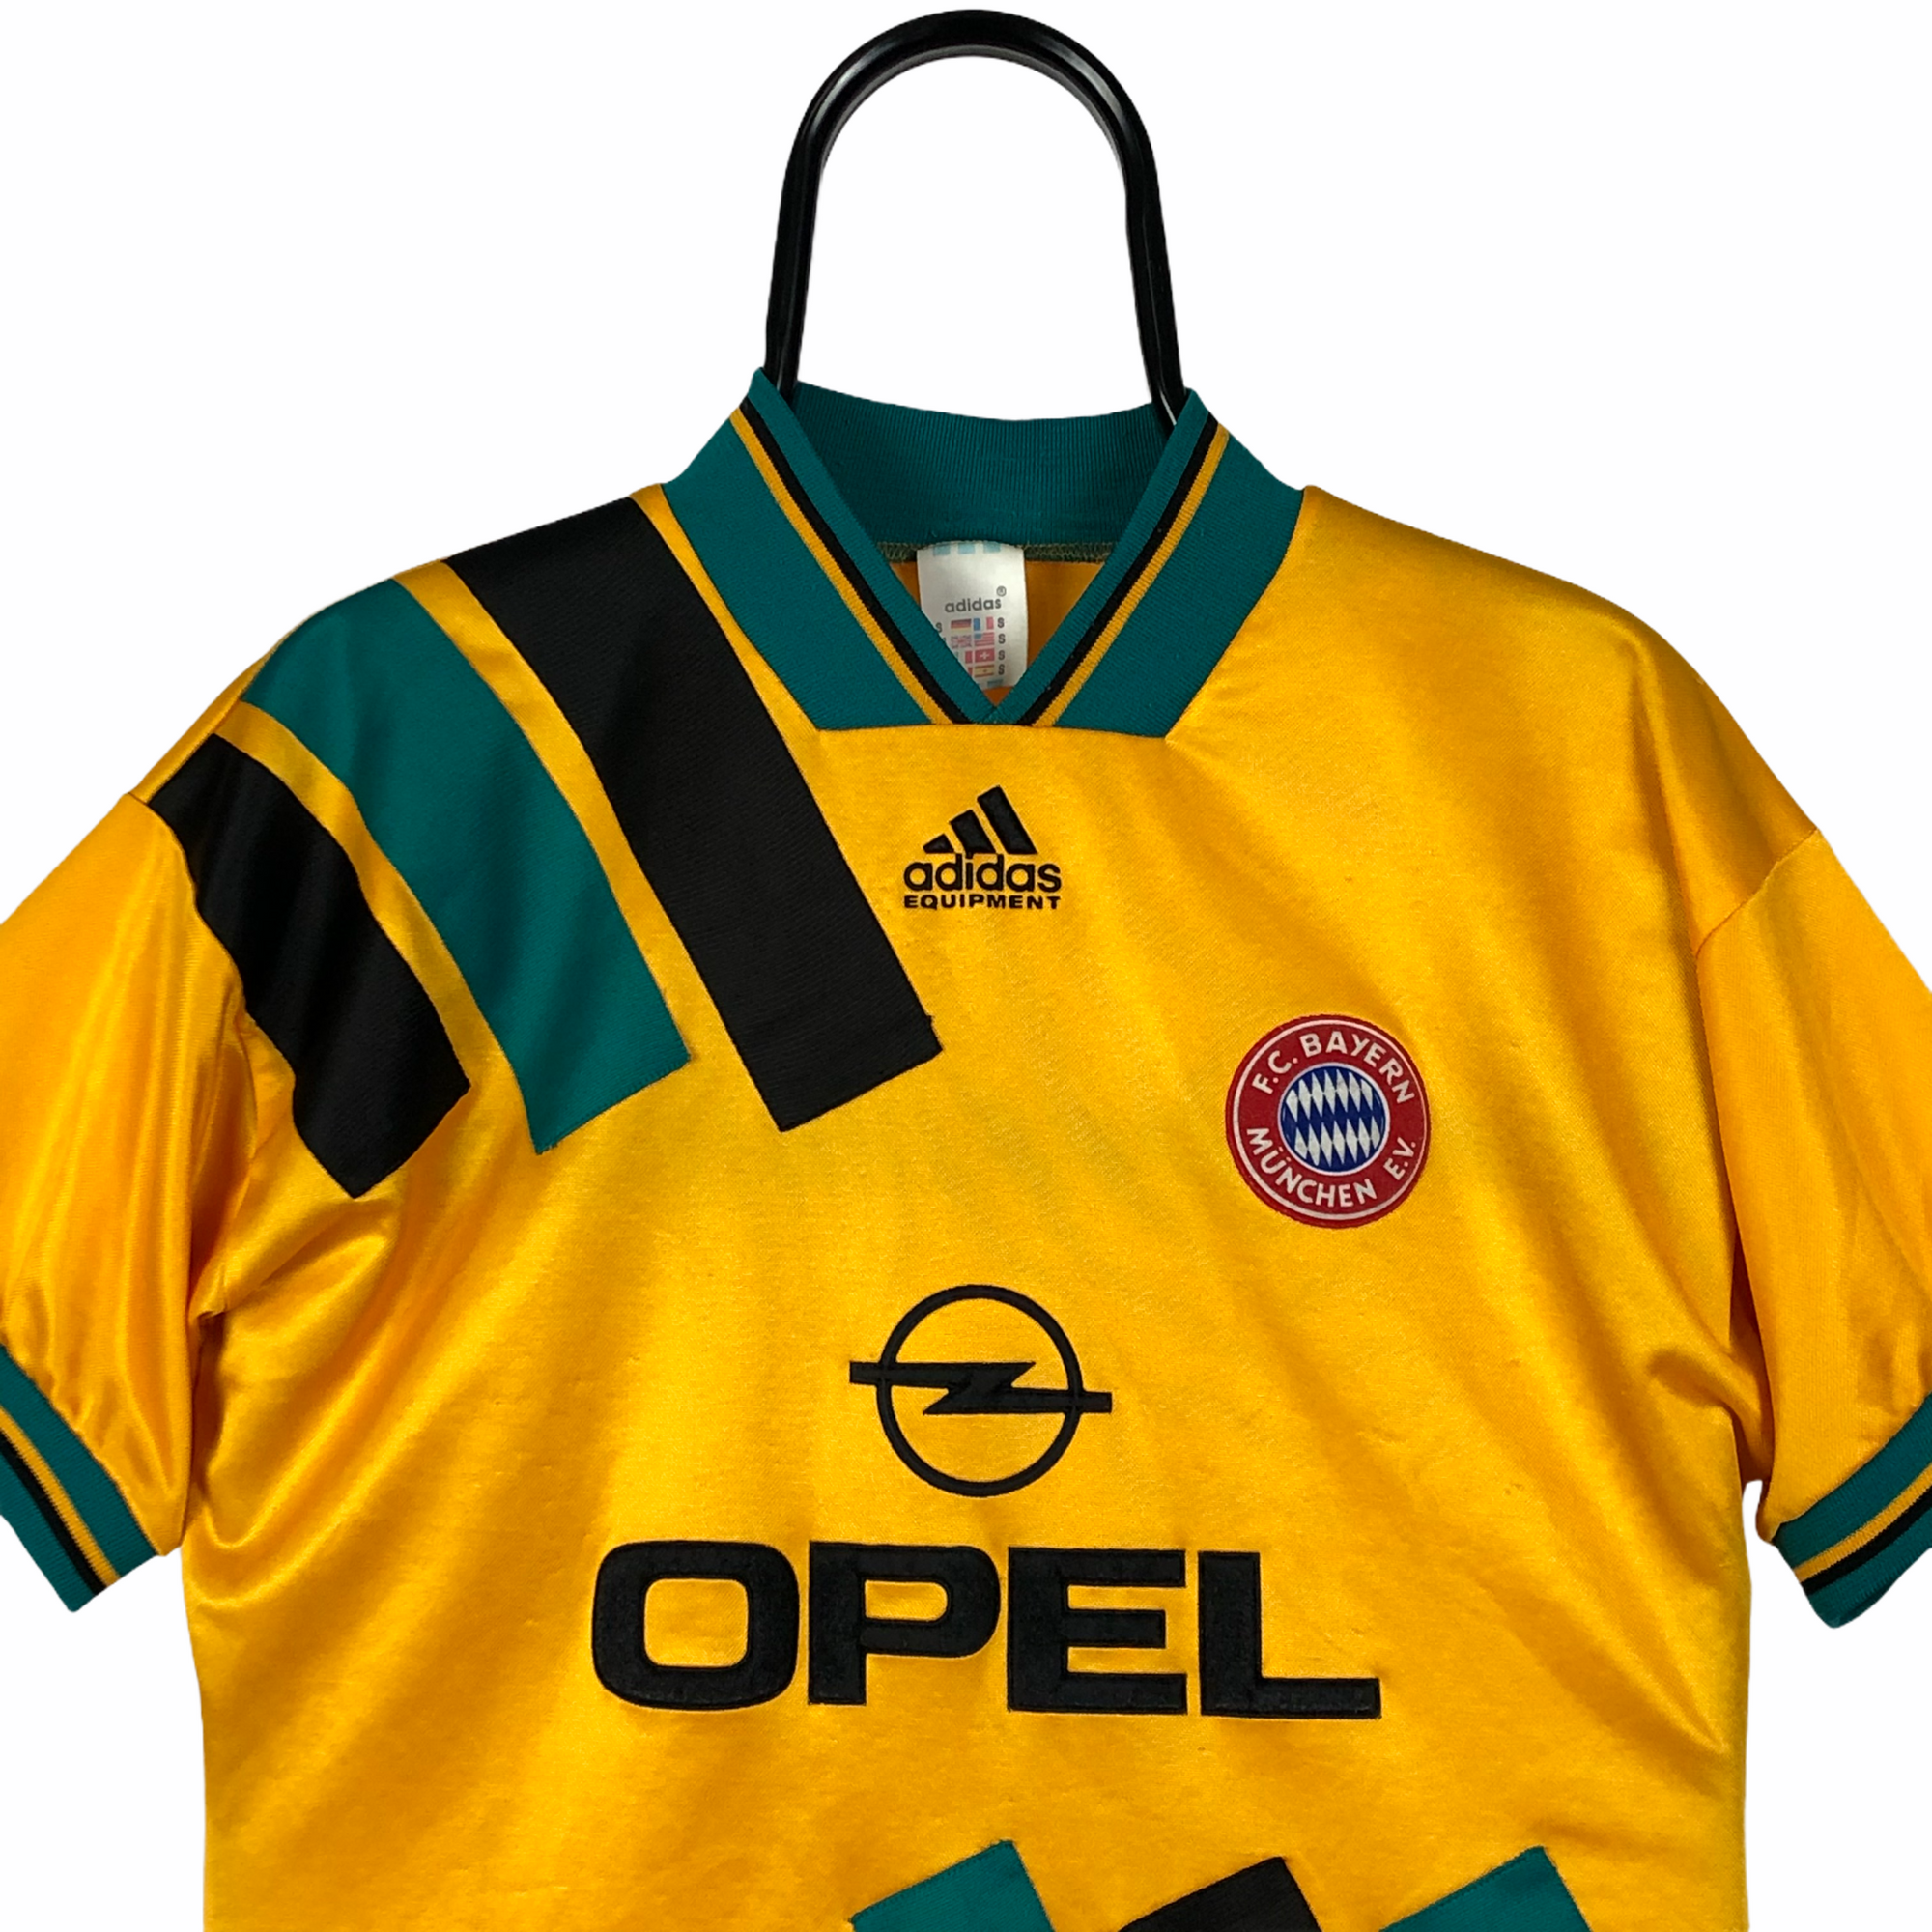 Incredibly Rare Vintage Adidas Equipment Bayern Munich 1993/95 Away Shirt - Men's Small/Women's Medium